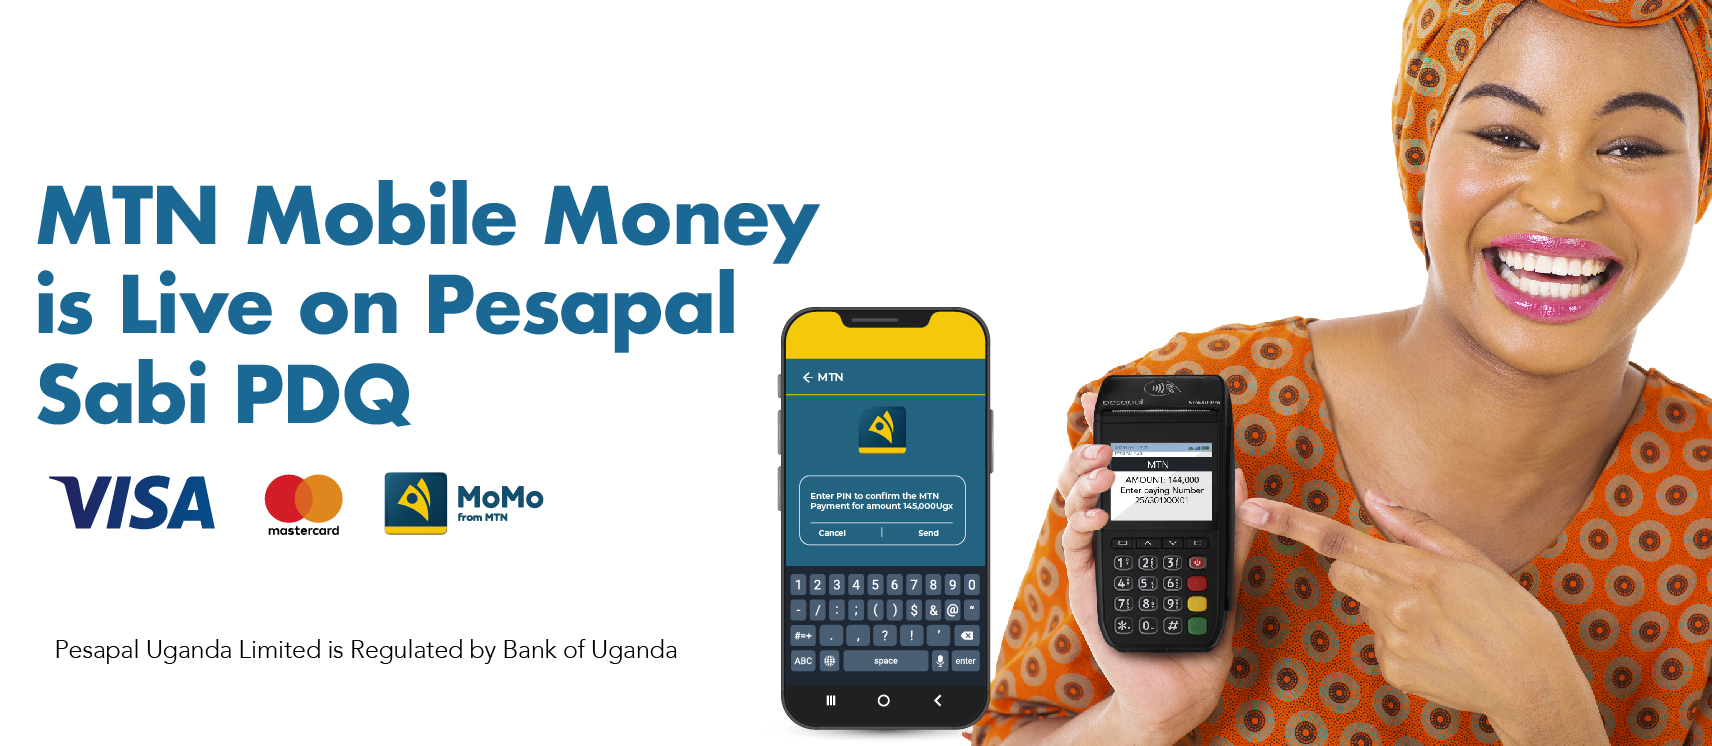 Pesapal, MTN Ink Partnership to Promote Cashless Payments in Uganda